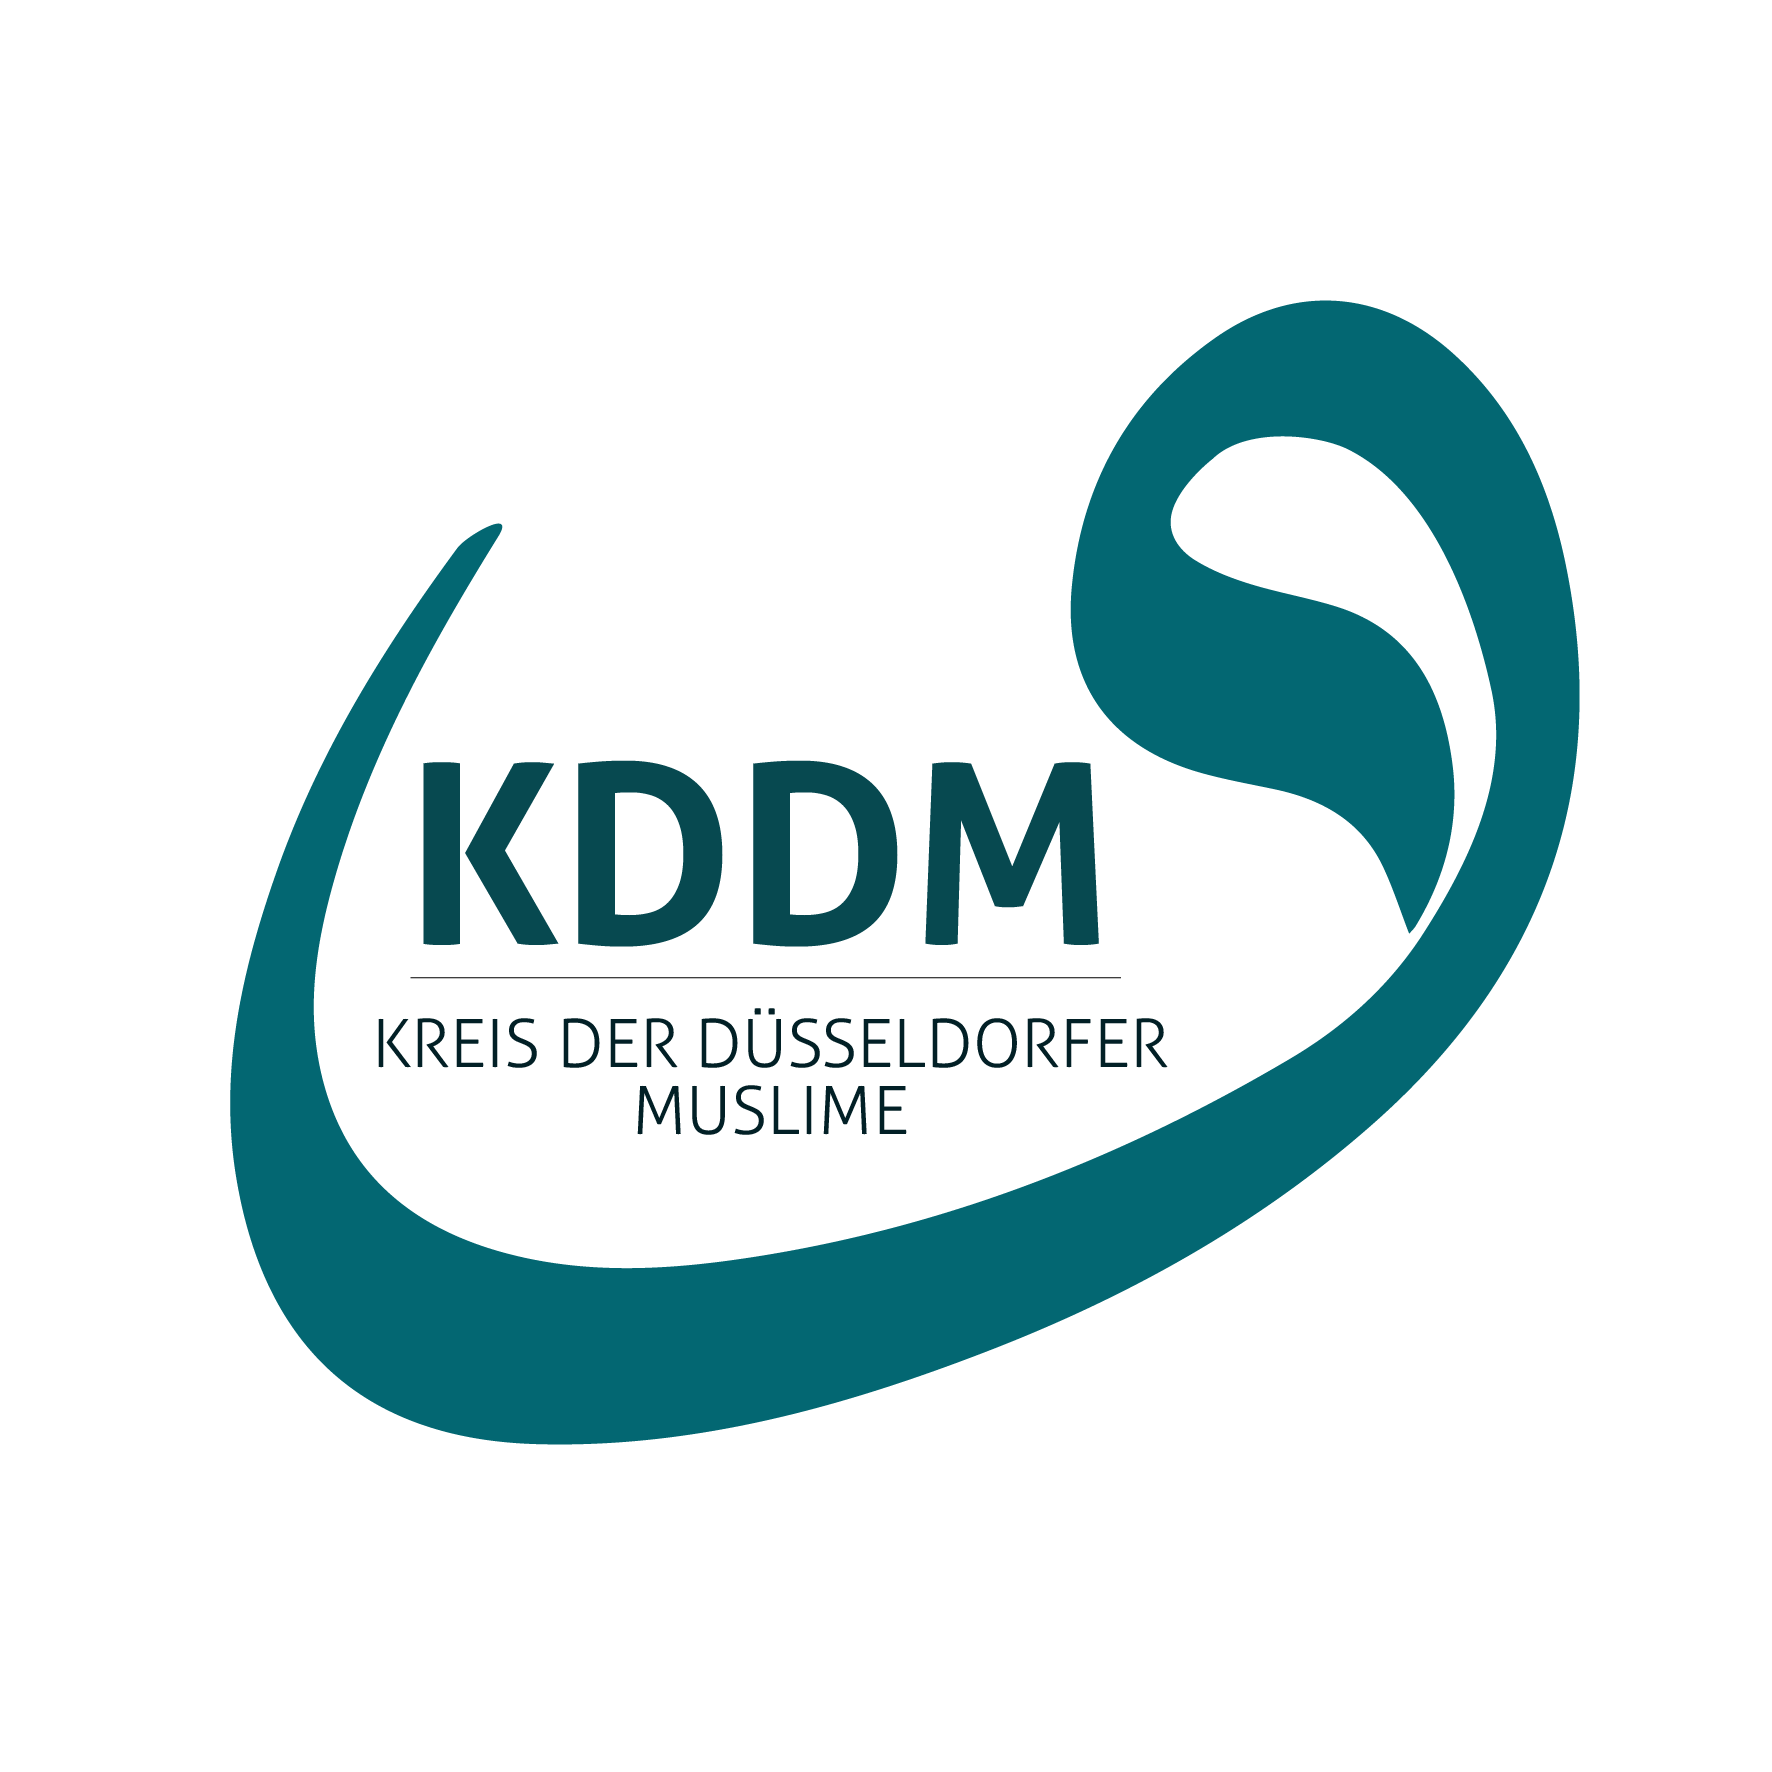 KDDM – Kreis der Düsseldorfer Muslime